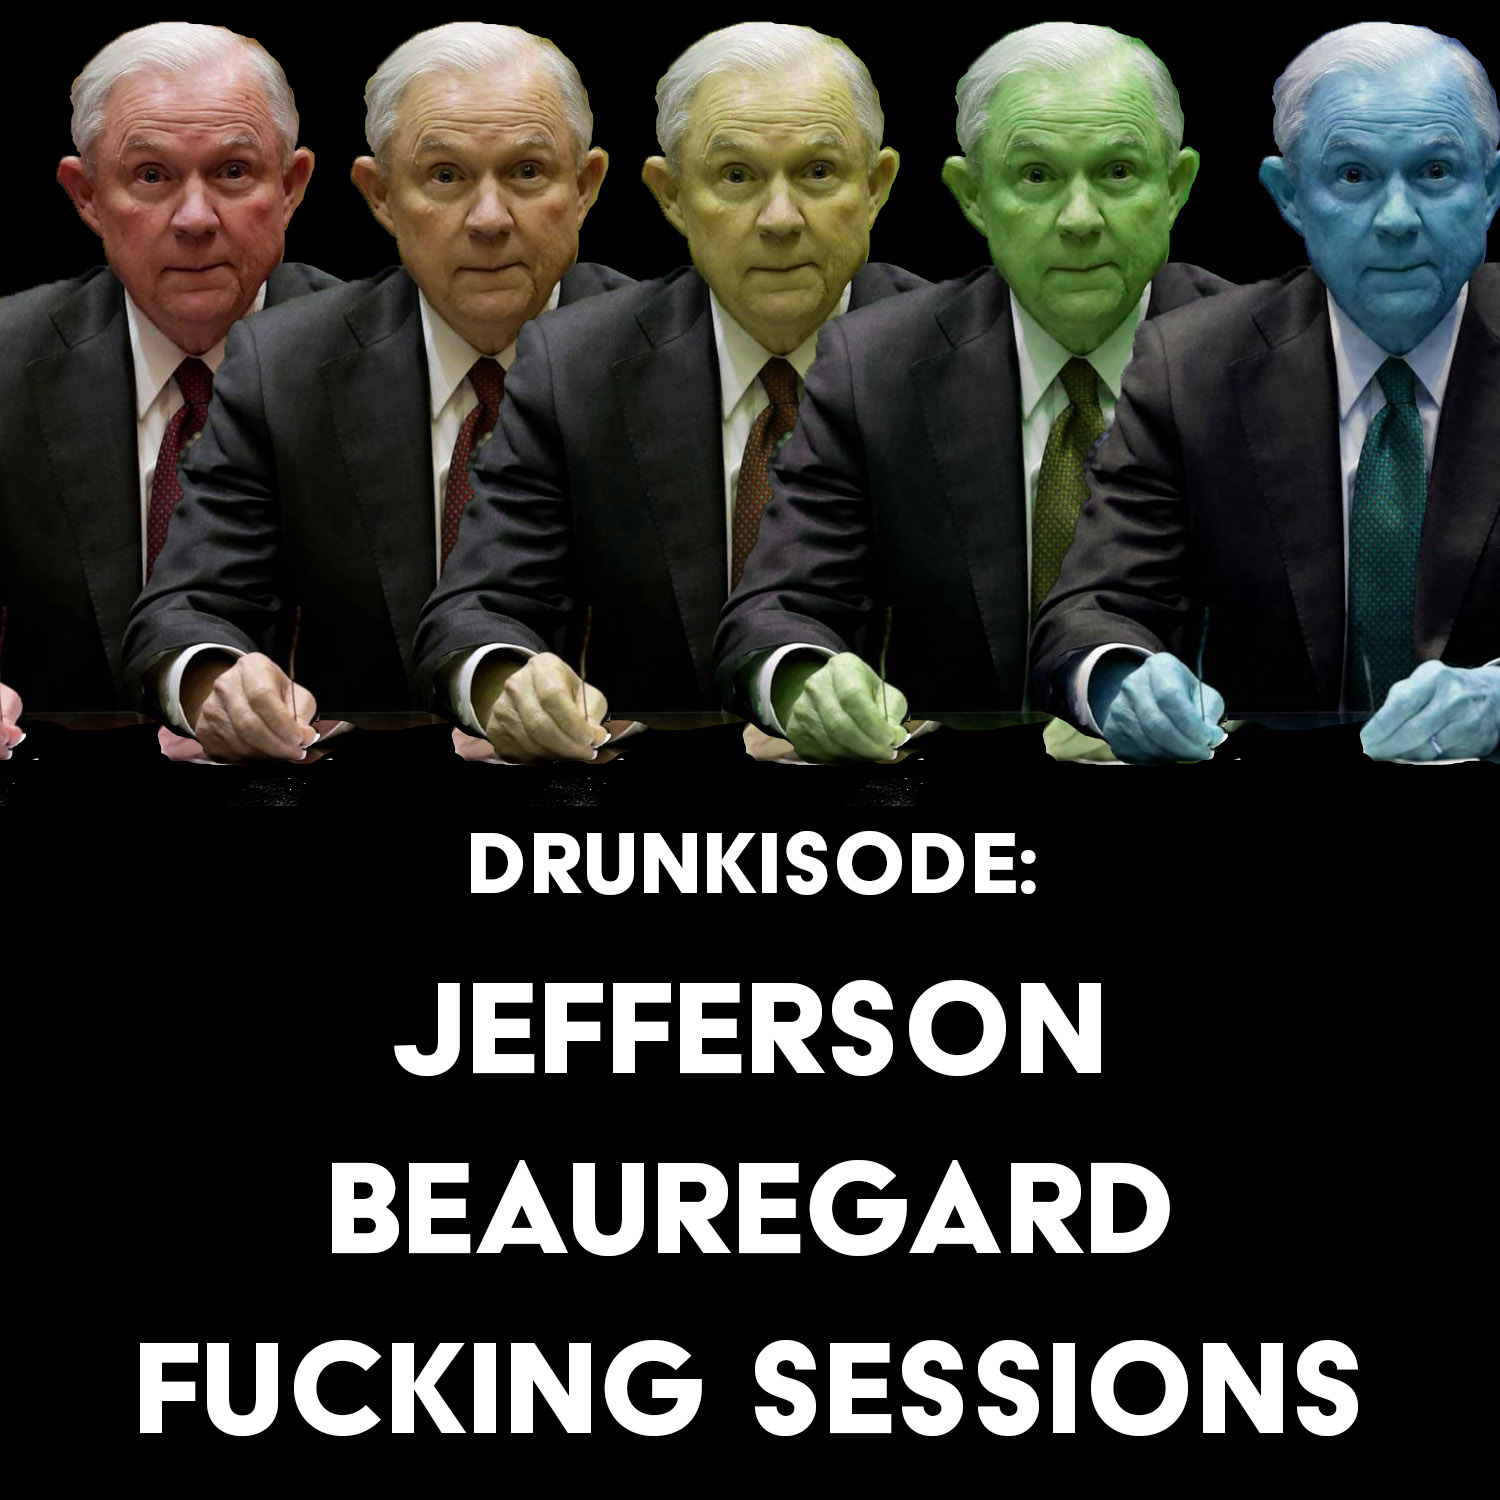 Drunkisode: Jefferson Beauregard Fucking Sessions